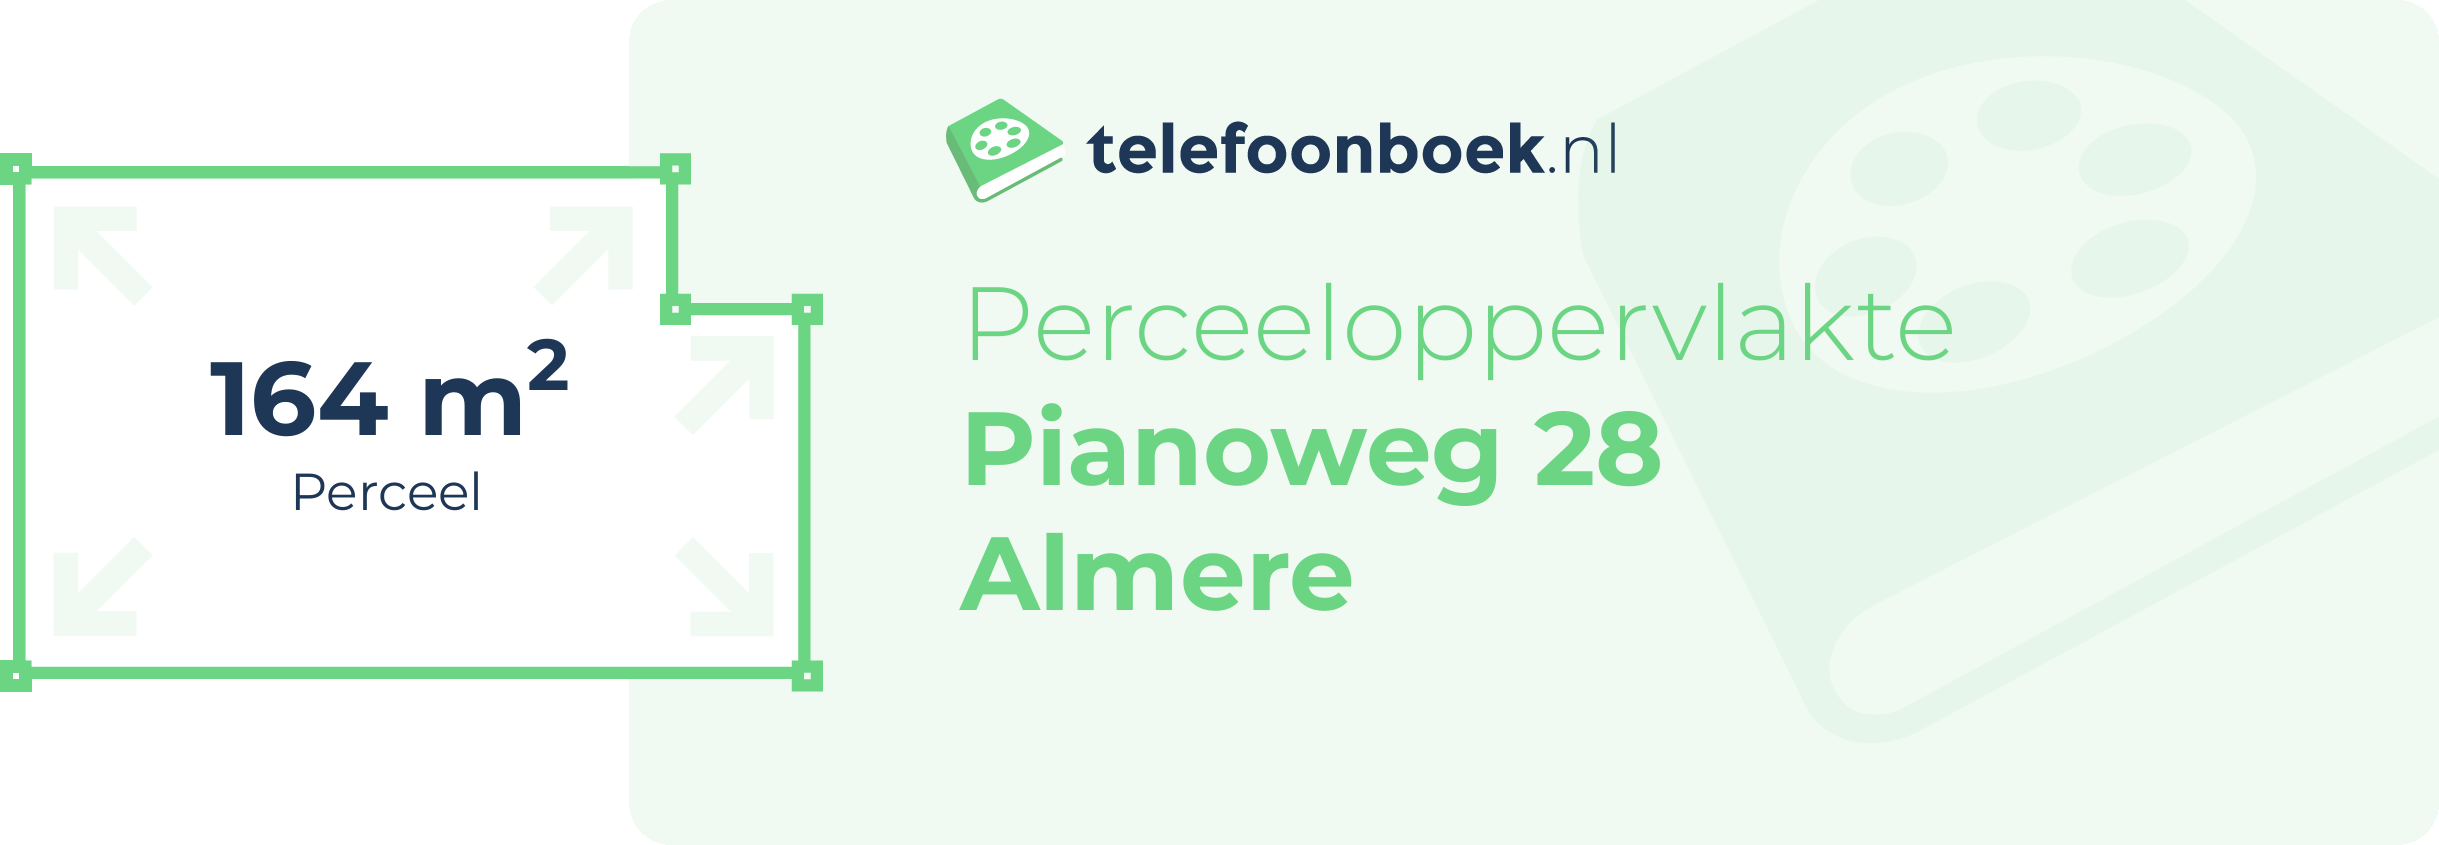 Perceeloppervlakte Pianoweg 28 Almere